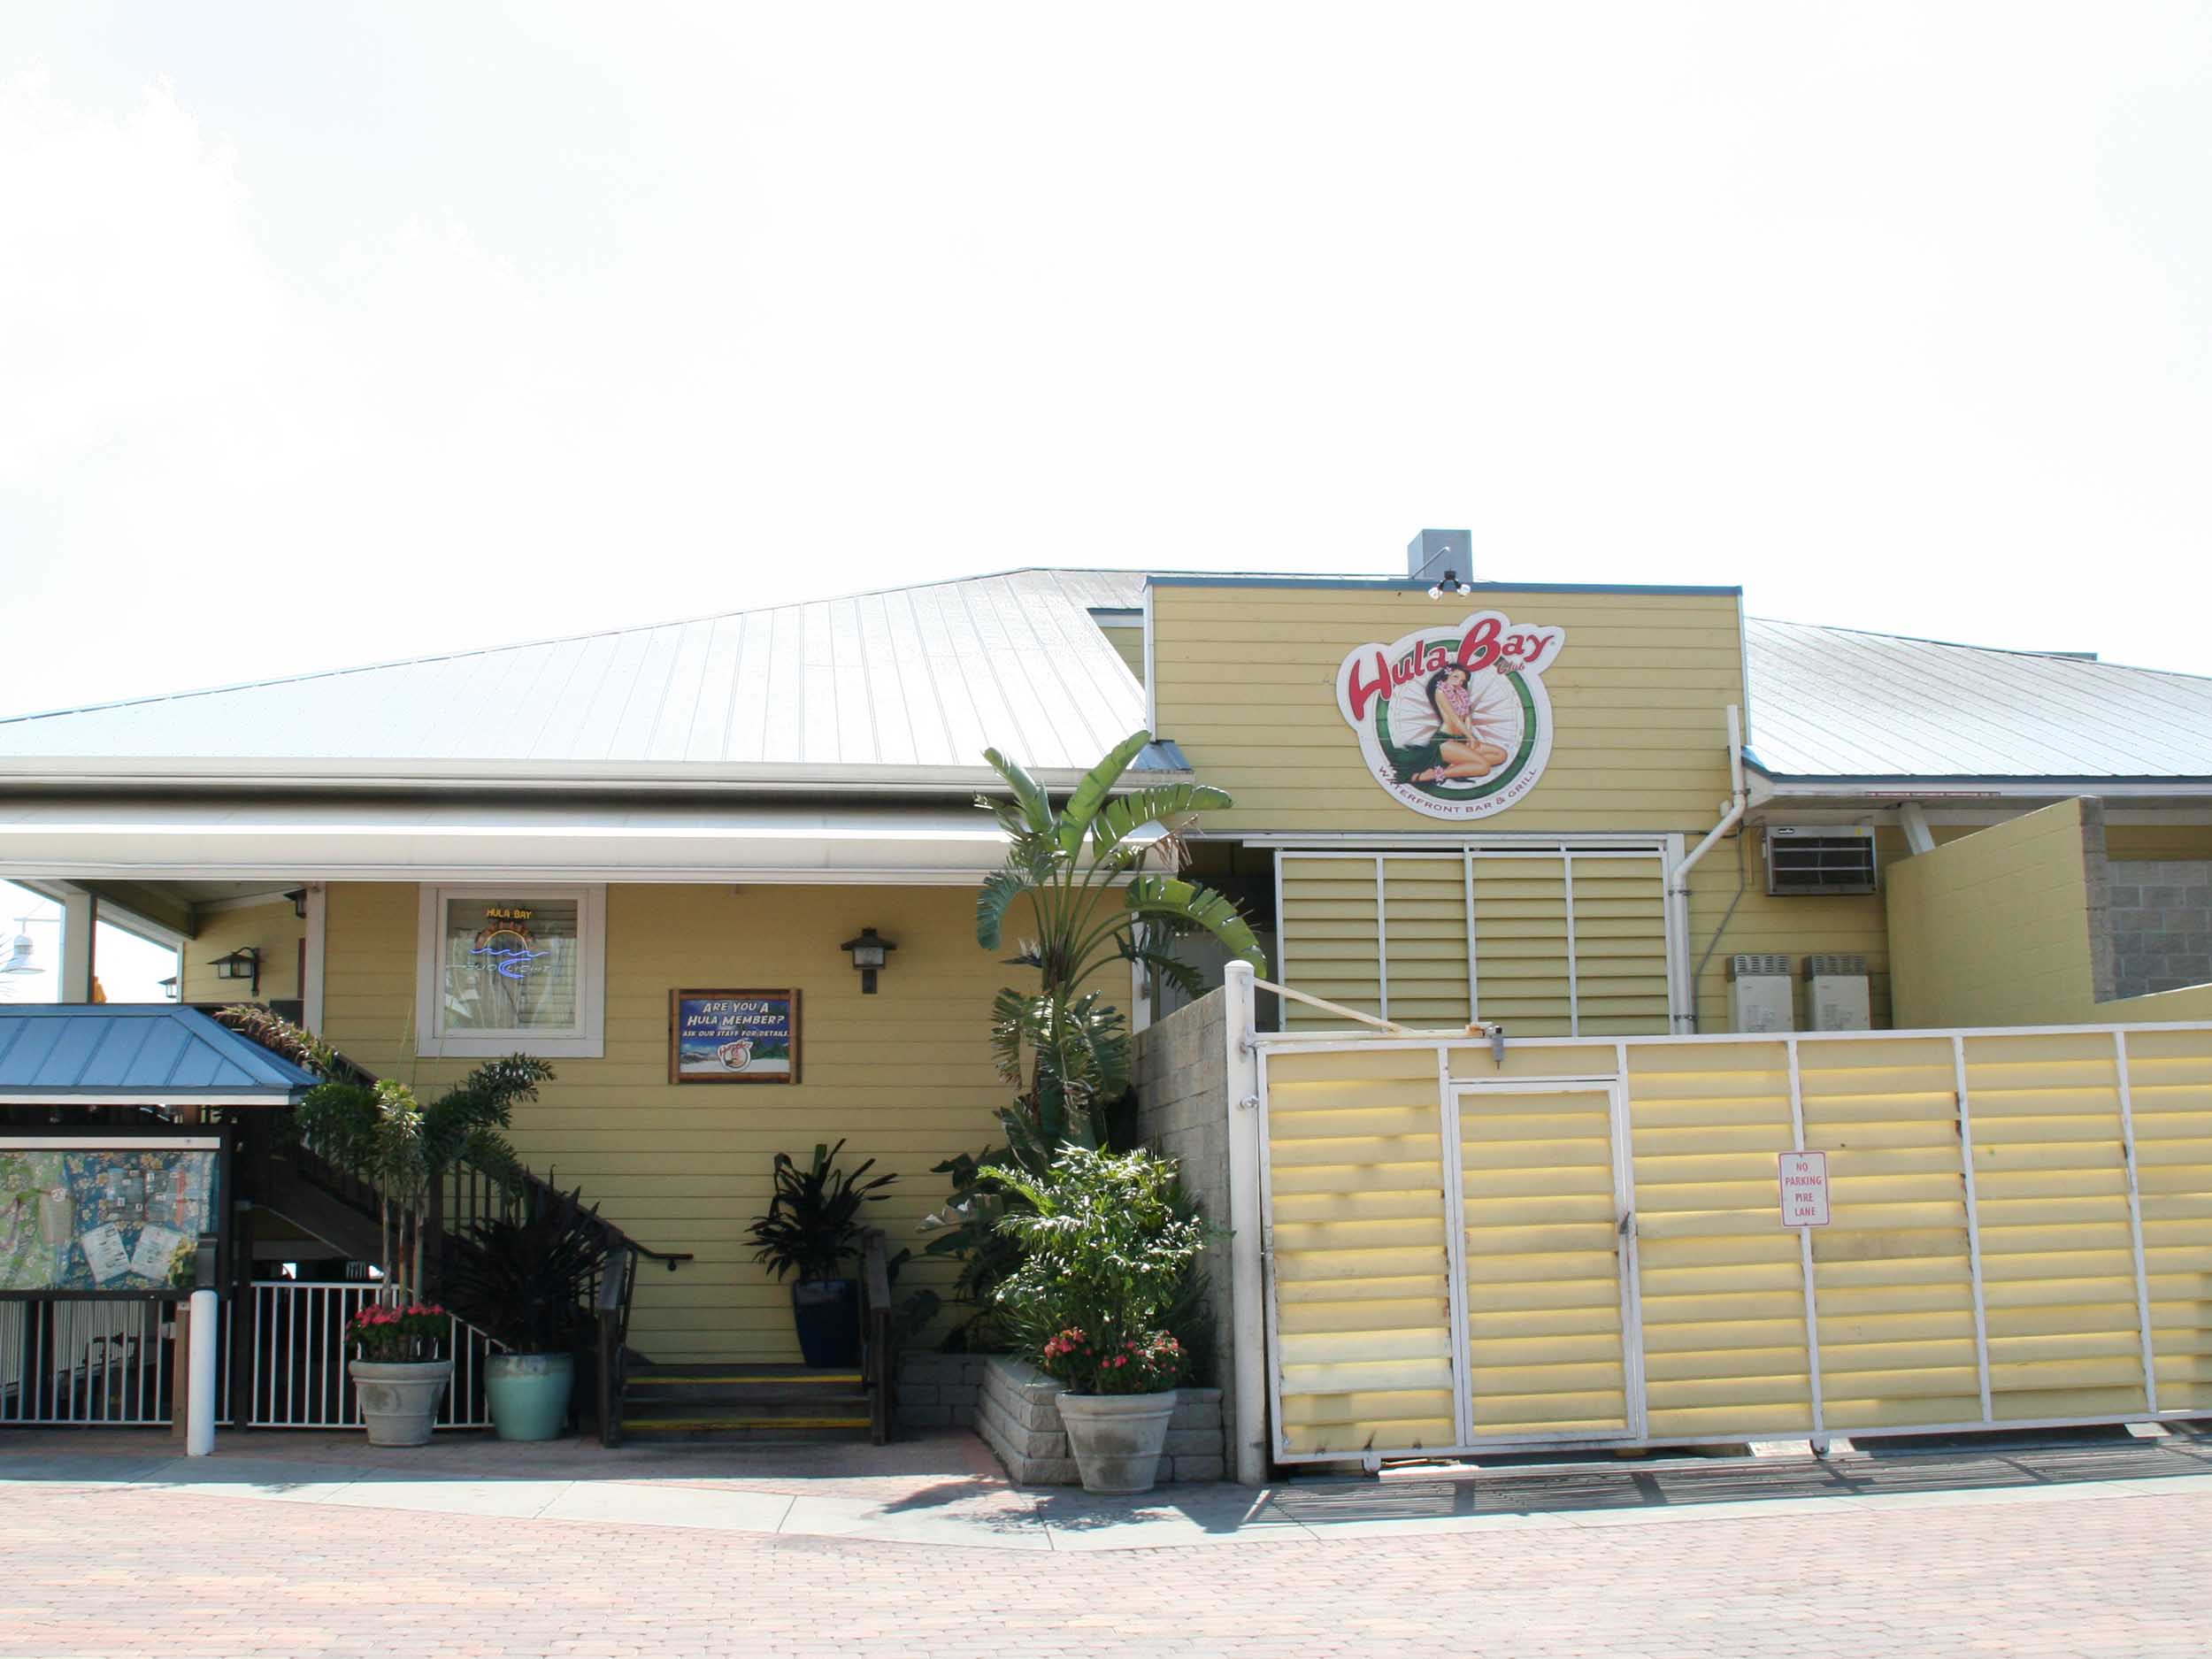 Hula Bay Club and Duke's Retired Surfer's Island Club Entrance